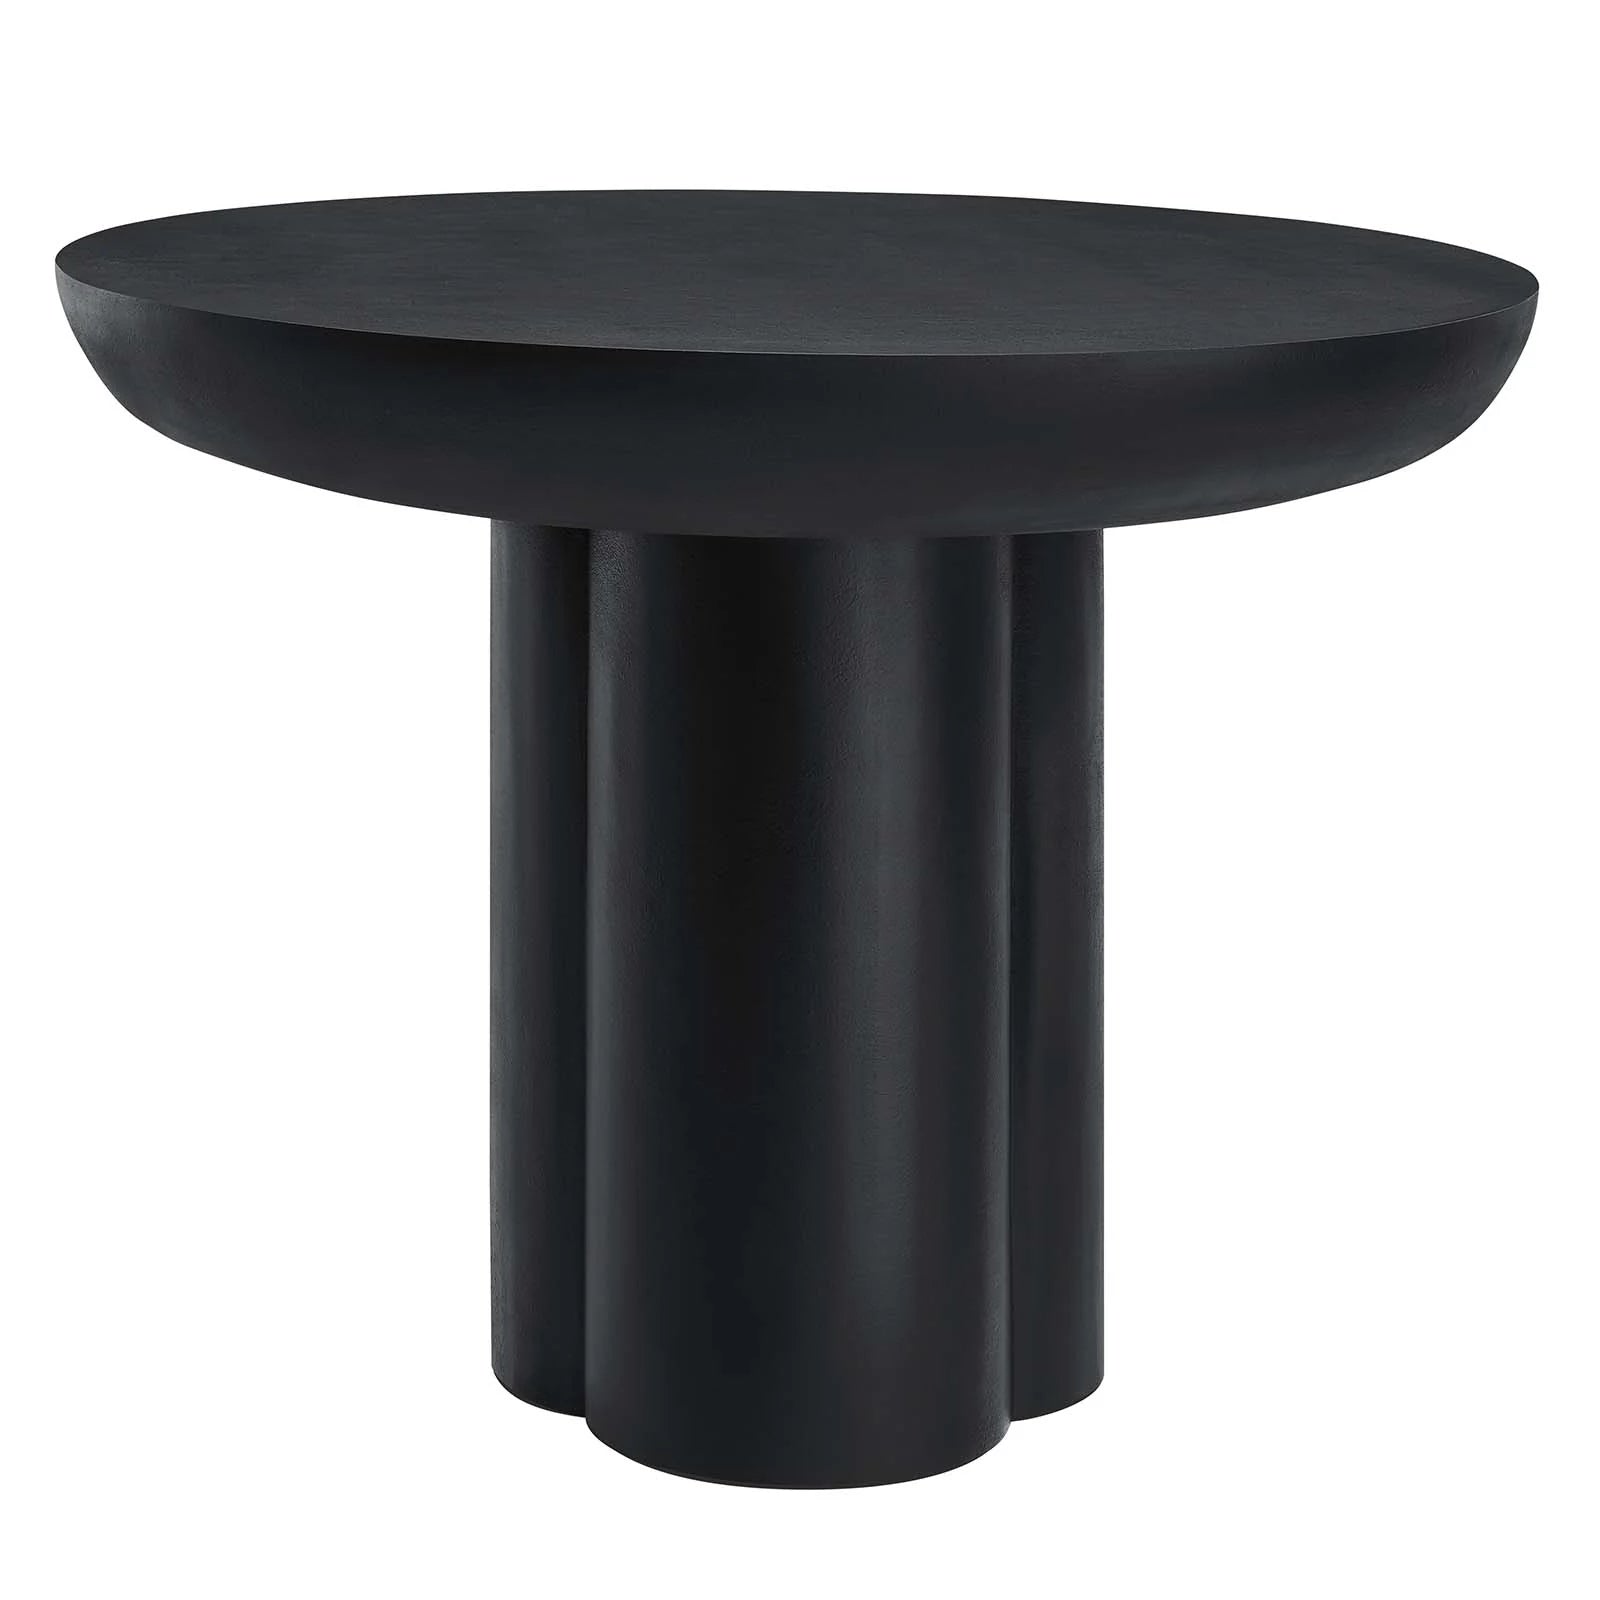 CASPER ROUND CONCRETE DINING TABLE - BLACK